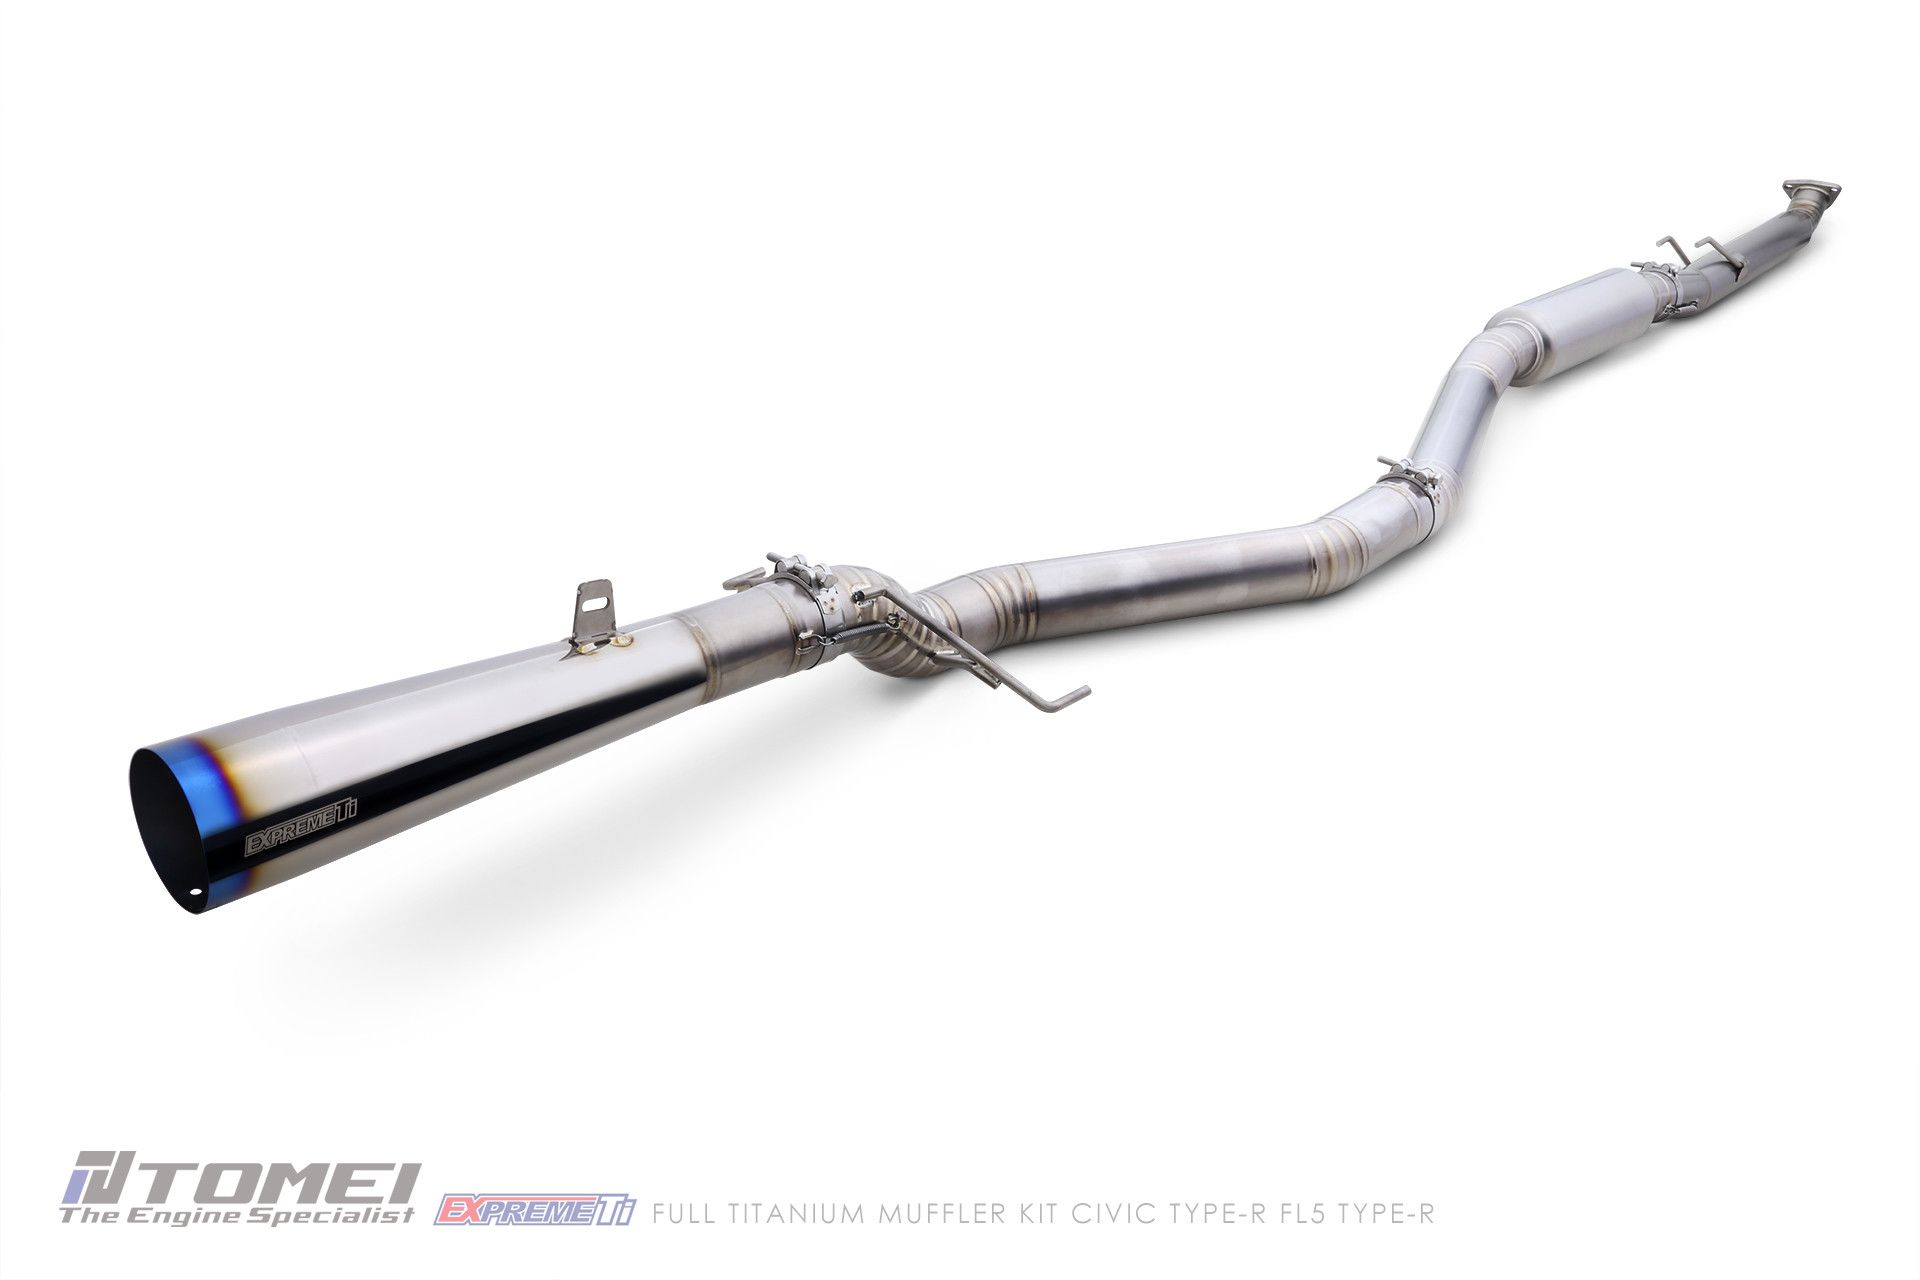 Tomei Expreme Ti Full Titanium Muffler Kit, Type R - Civic Type-R FL5